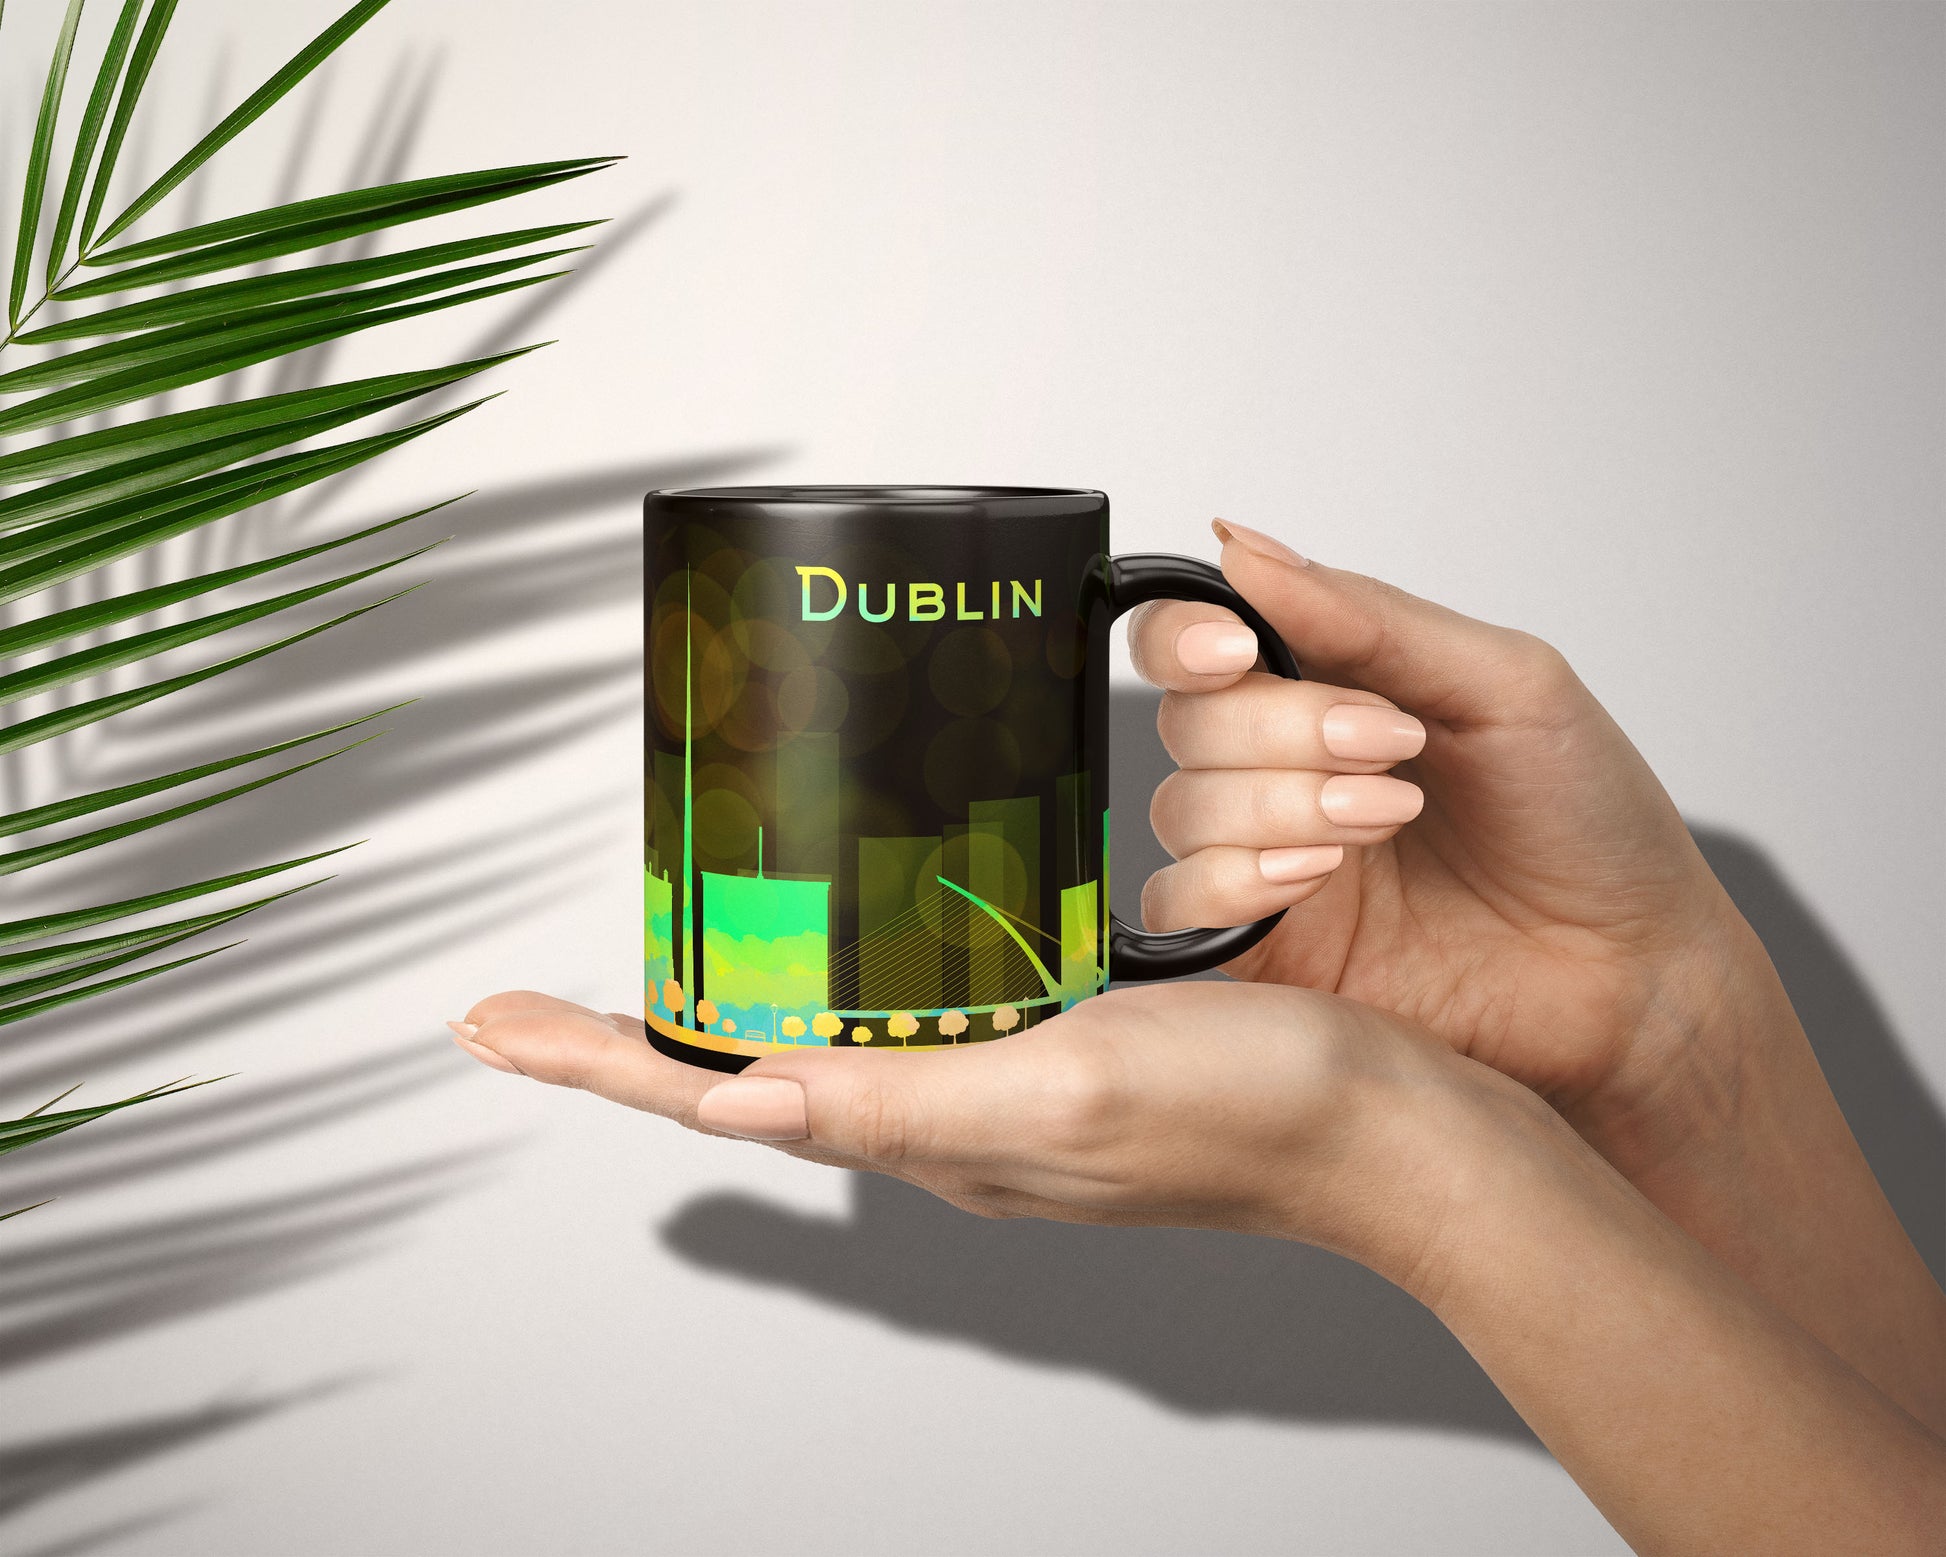 Dublin art mug